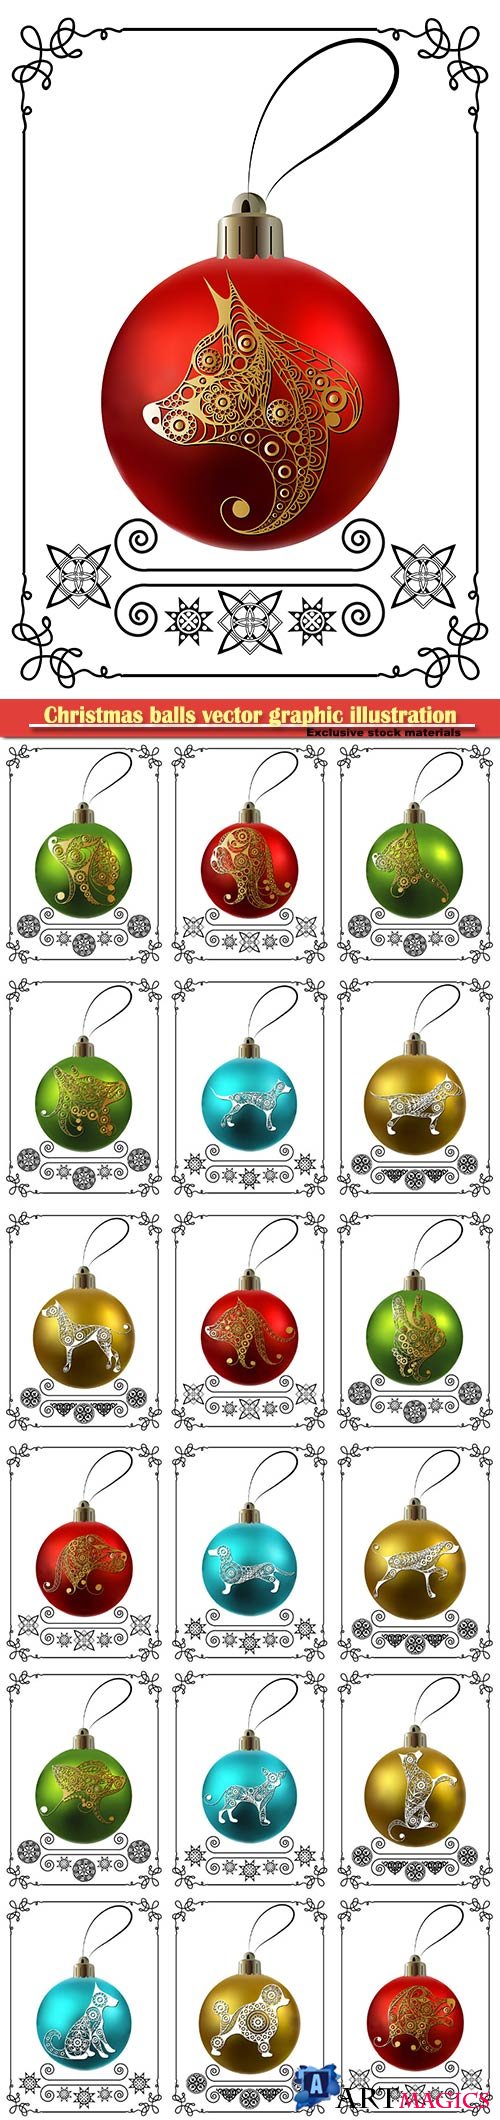 Christmas balls vector graphic illustration